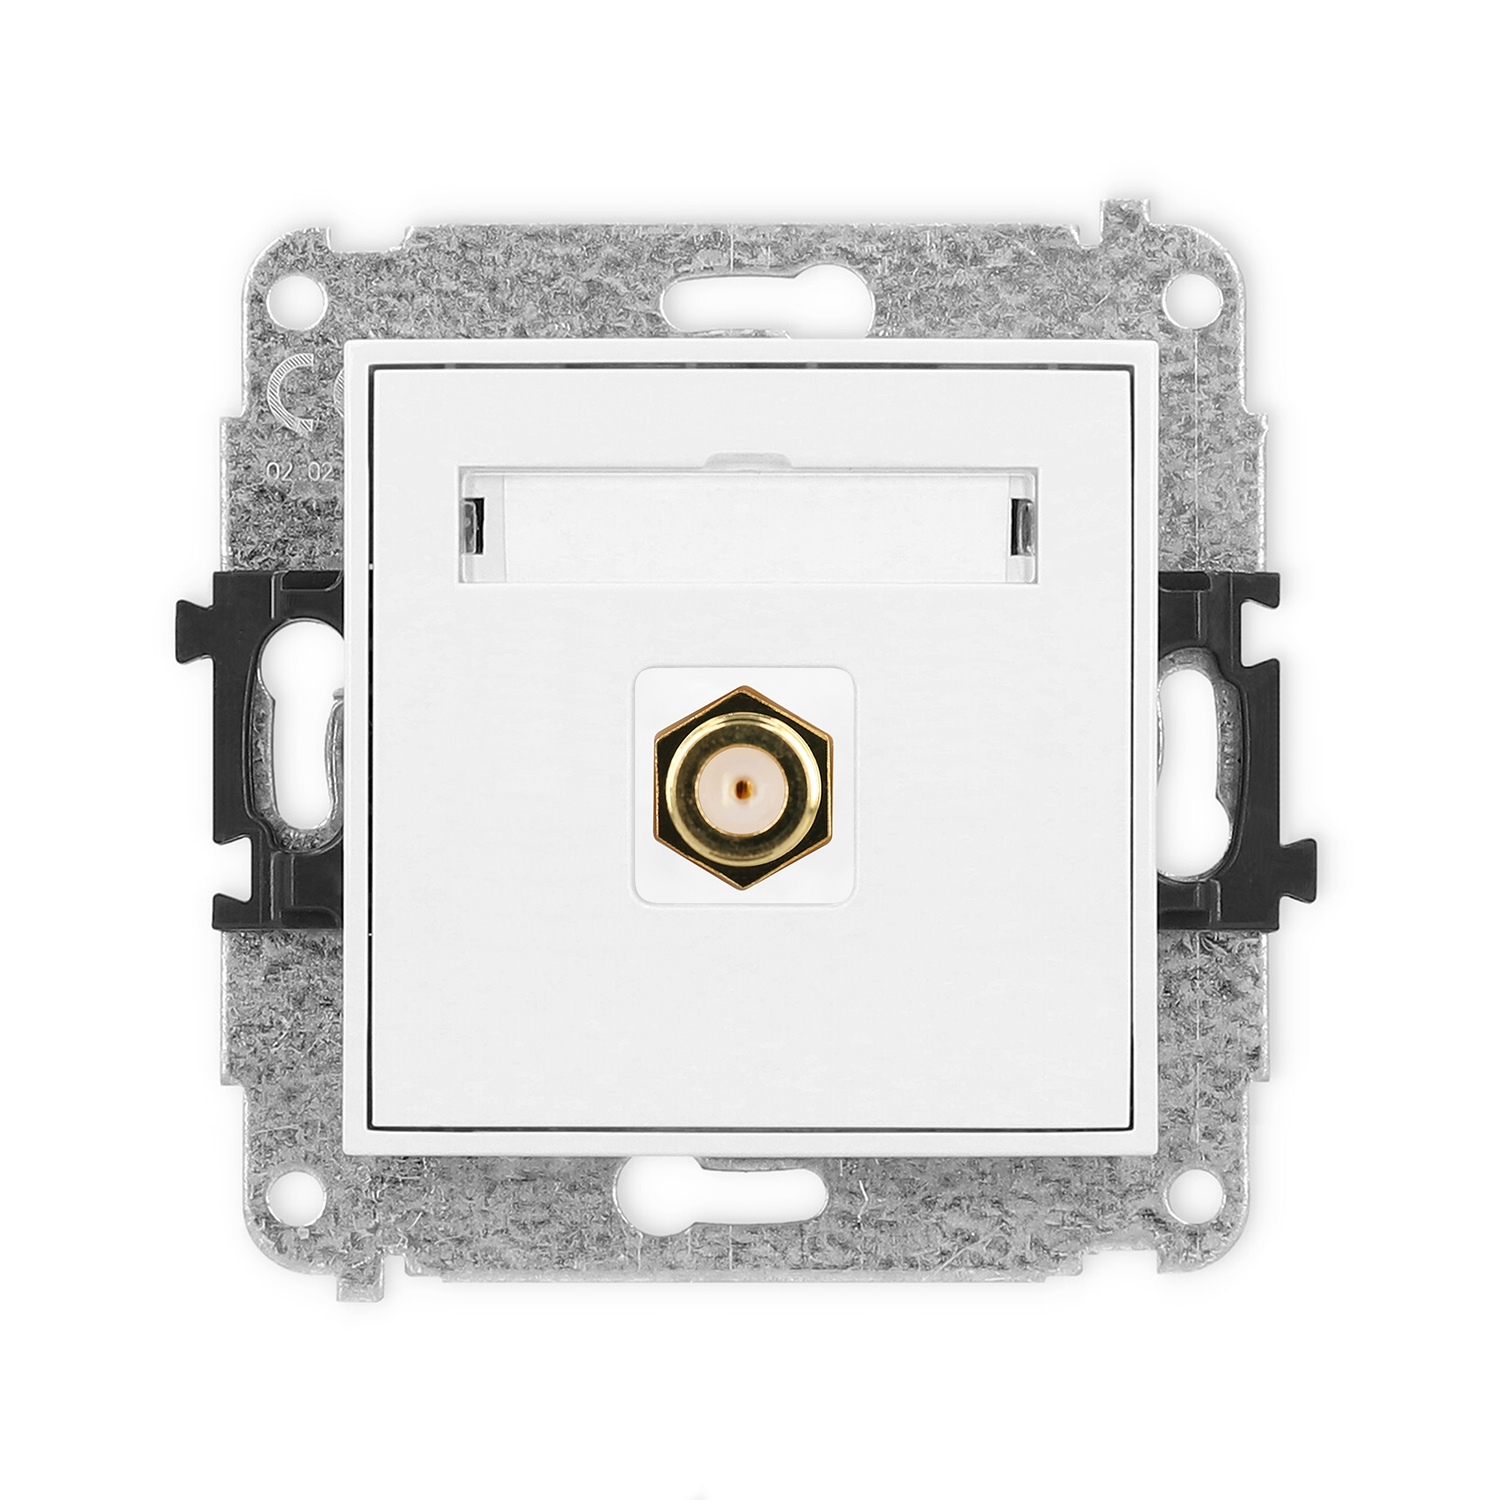 Single antenna F type socket (SAT) mechanism - gold-plated